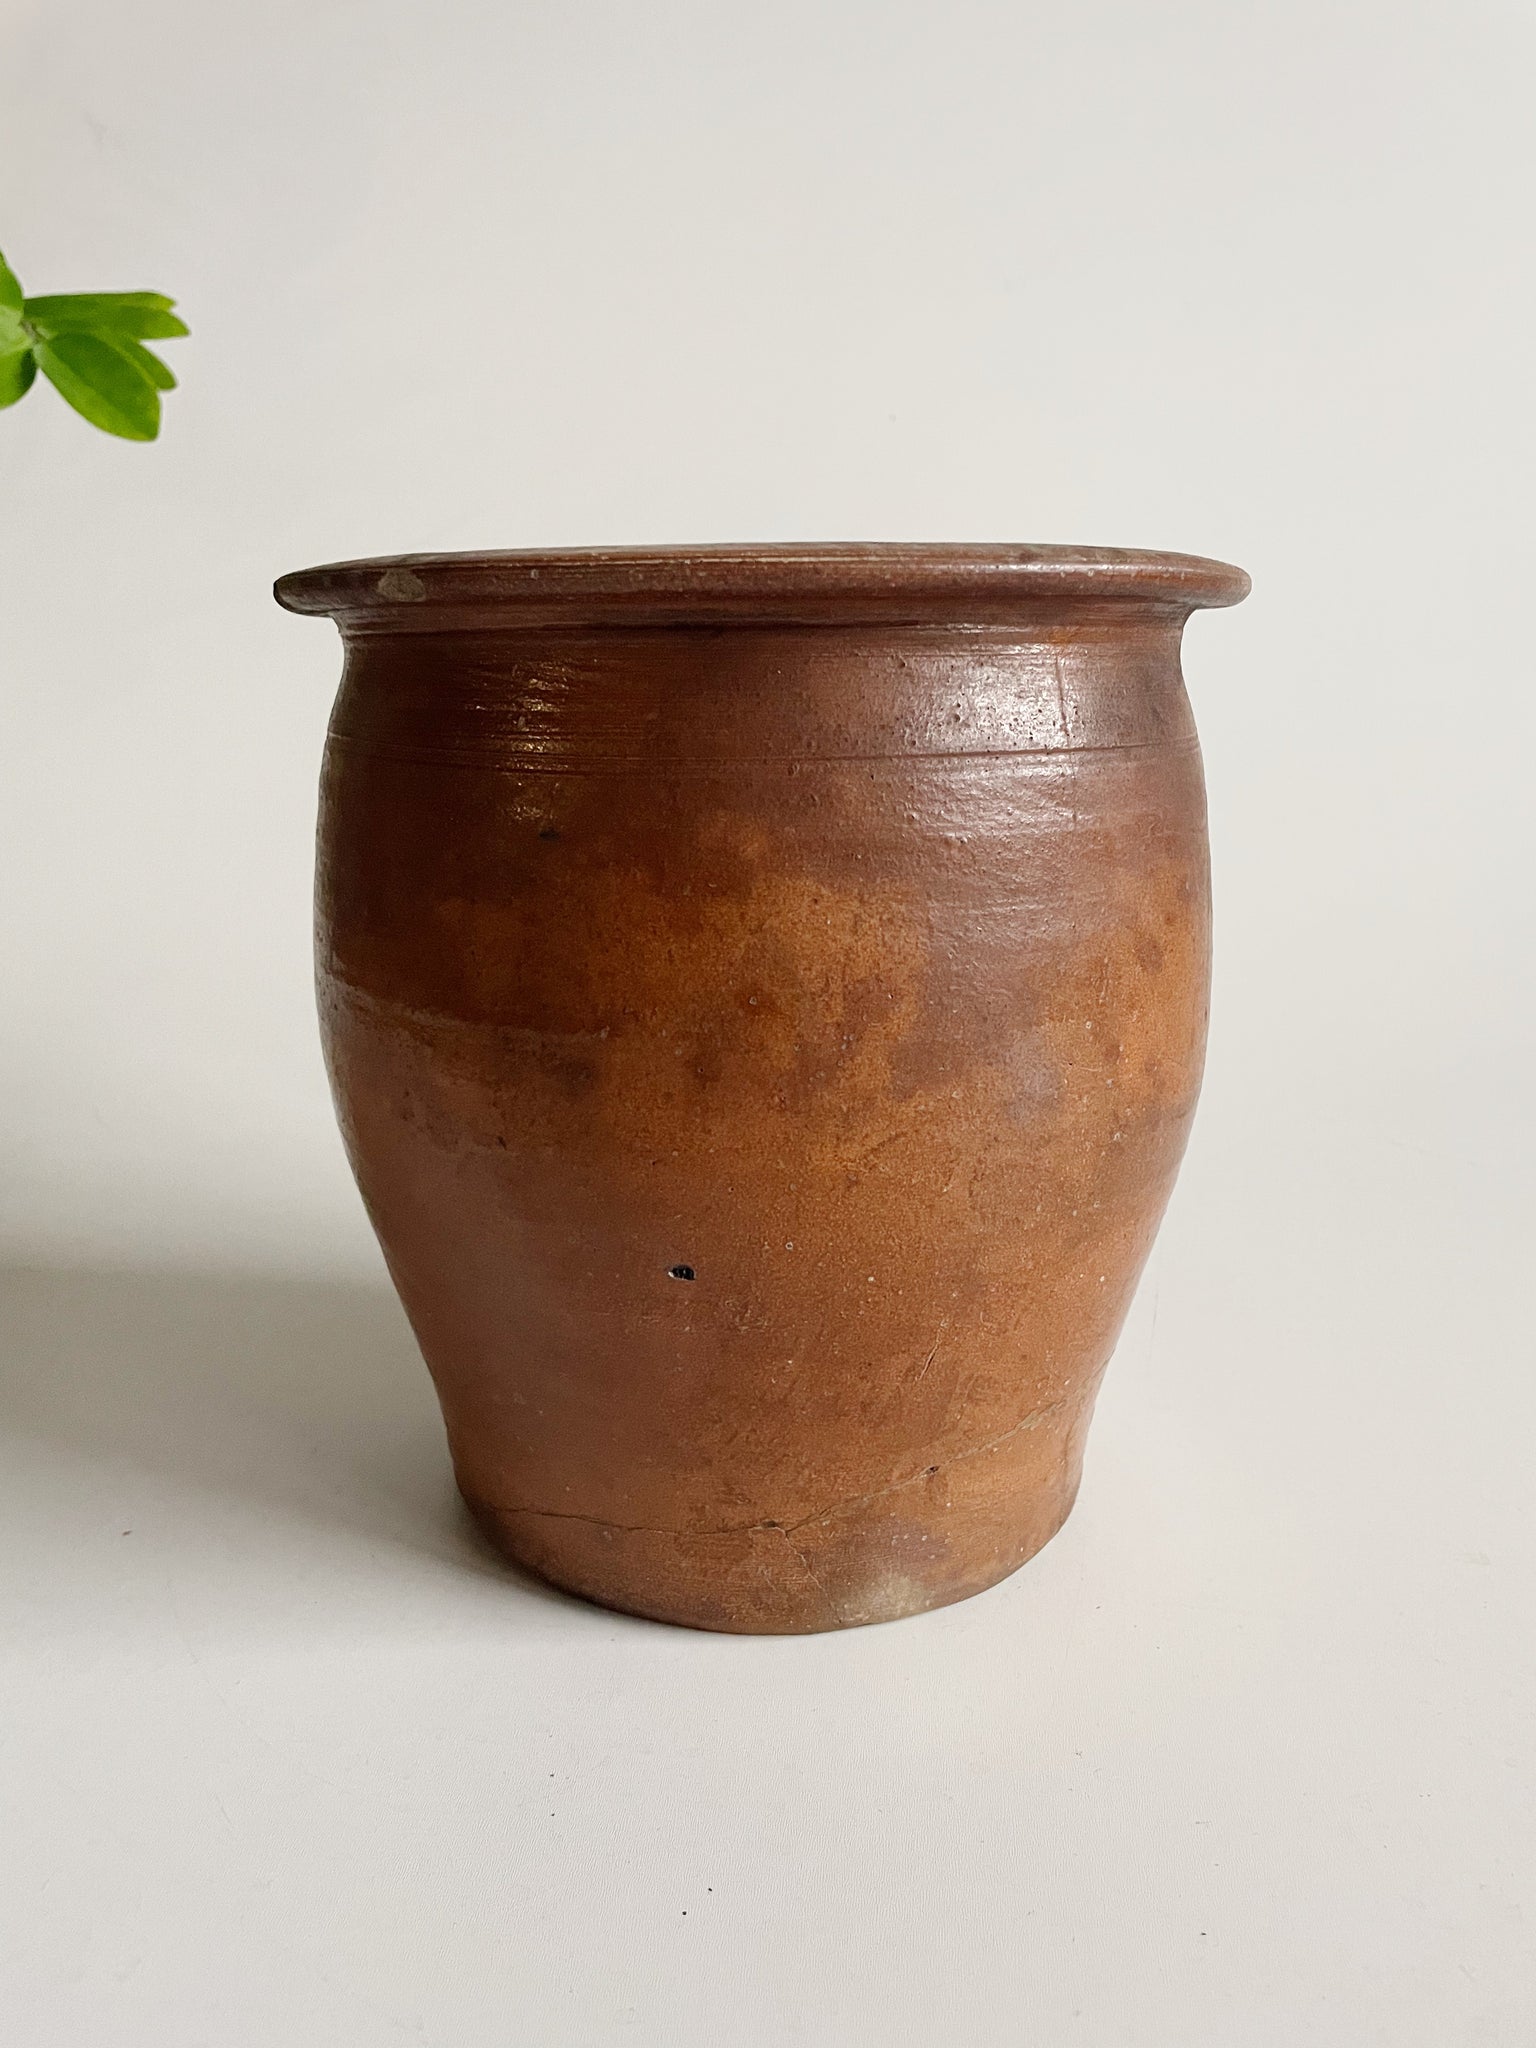 Antique Terra Cotta Clay Pot with Handles